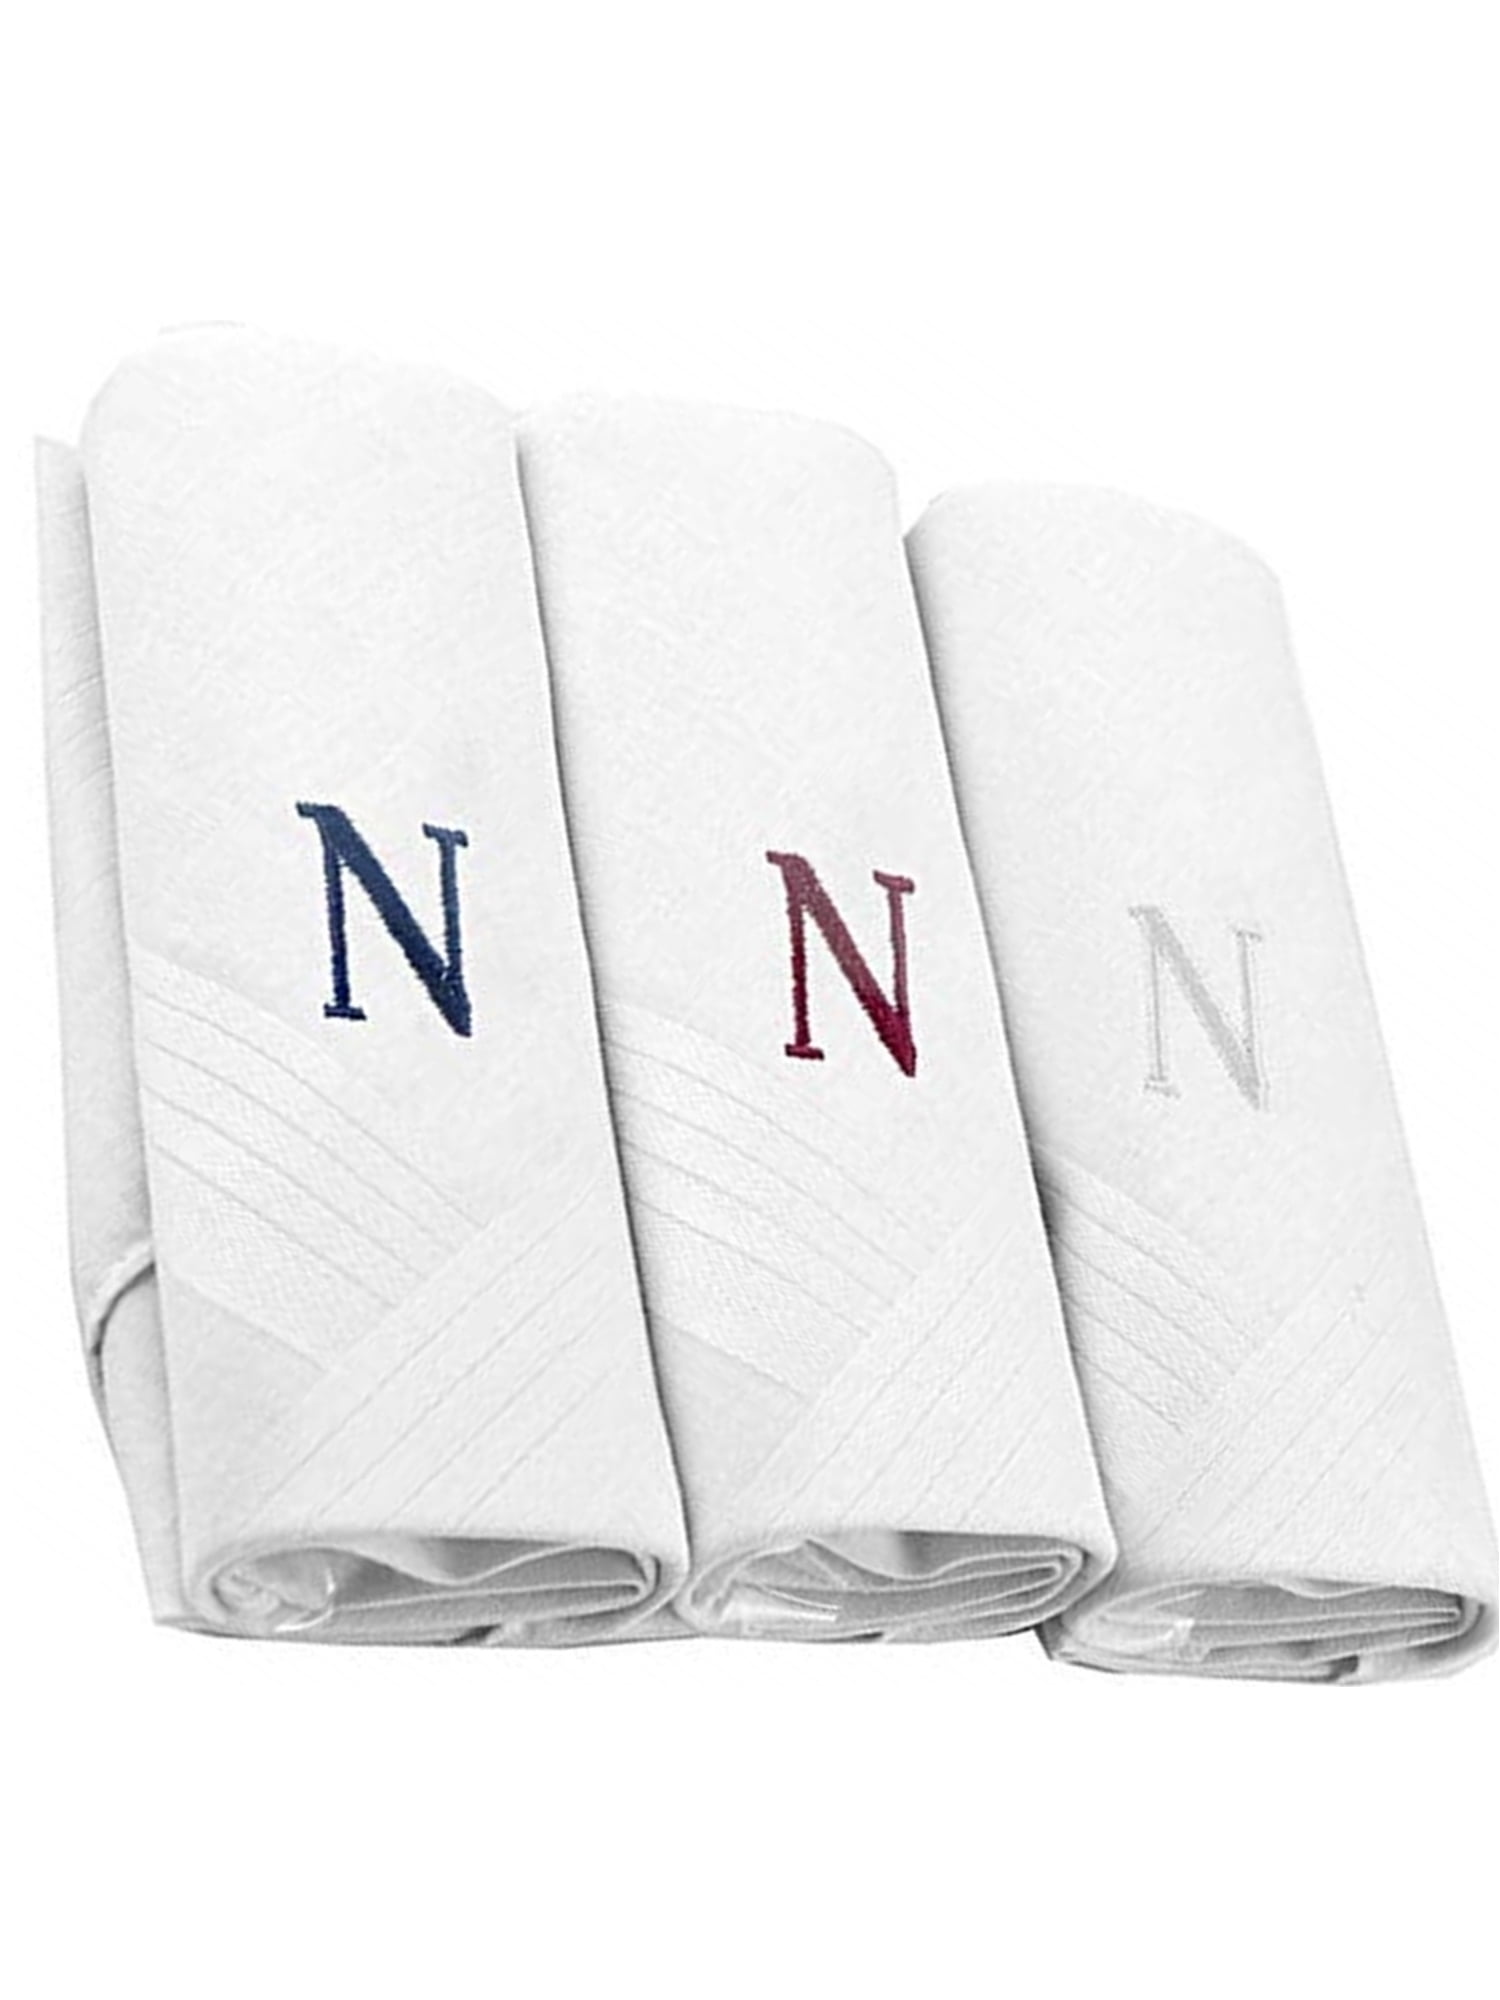 T&Z 3 Pack Mens Cotton Initial Monogrammed Handkerchief Gift Set 